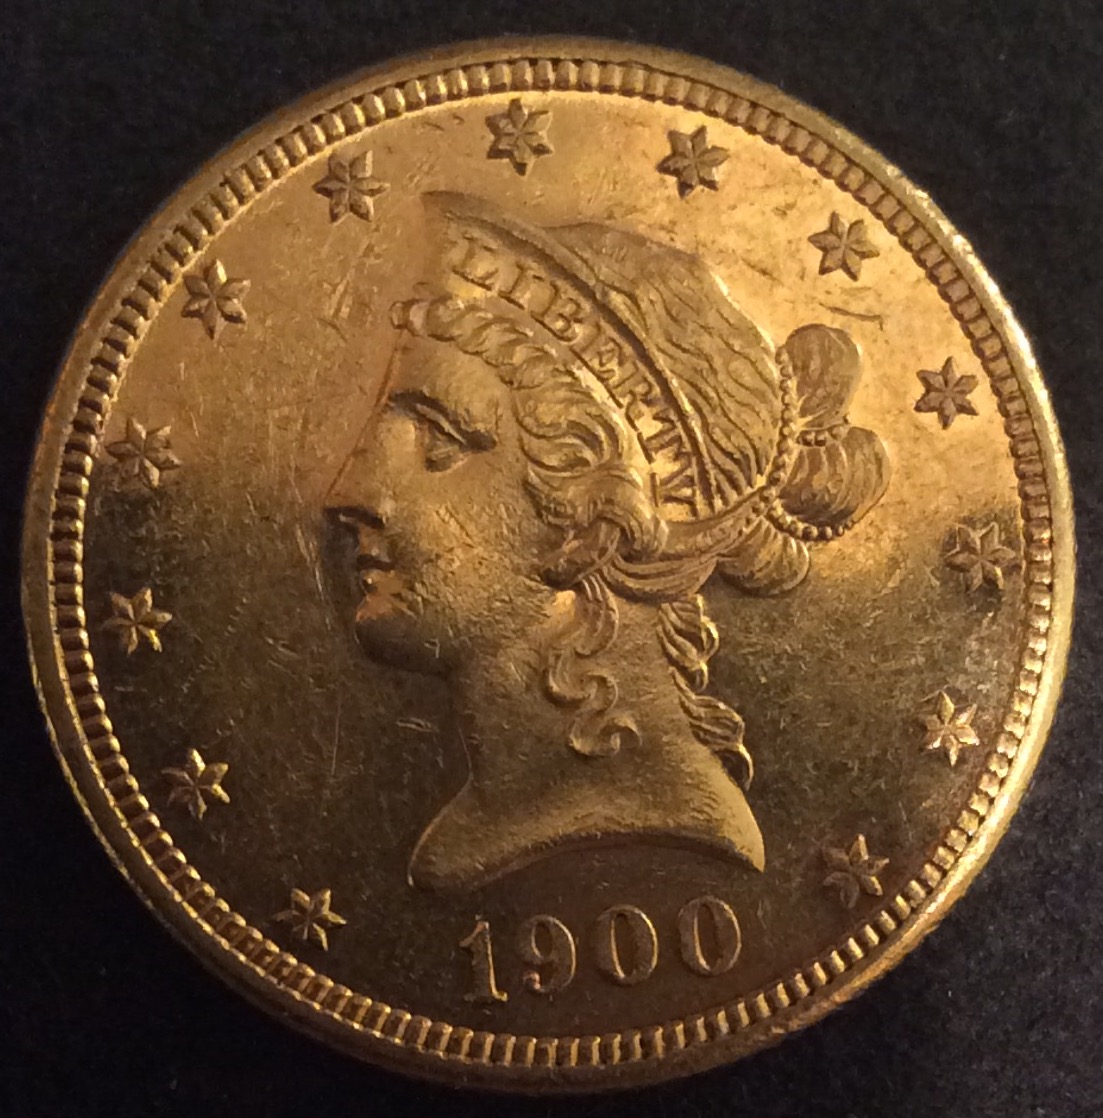 Collecting gold coins | Coin Talk